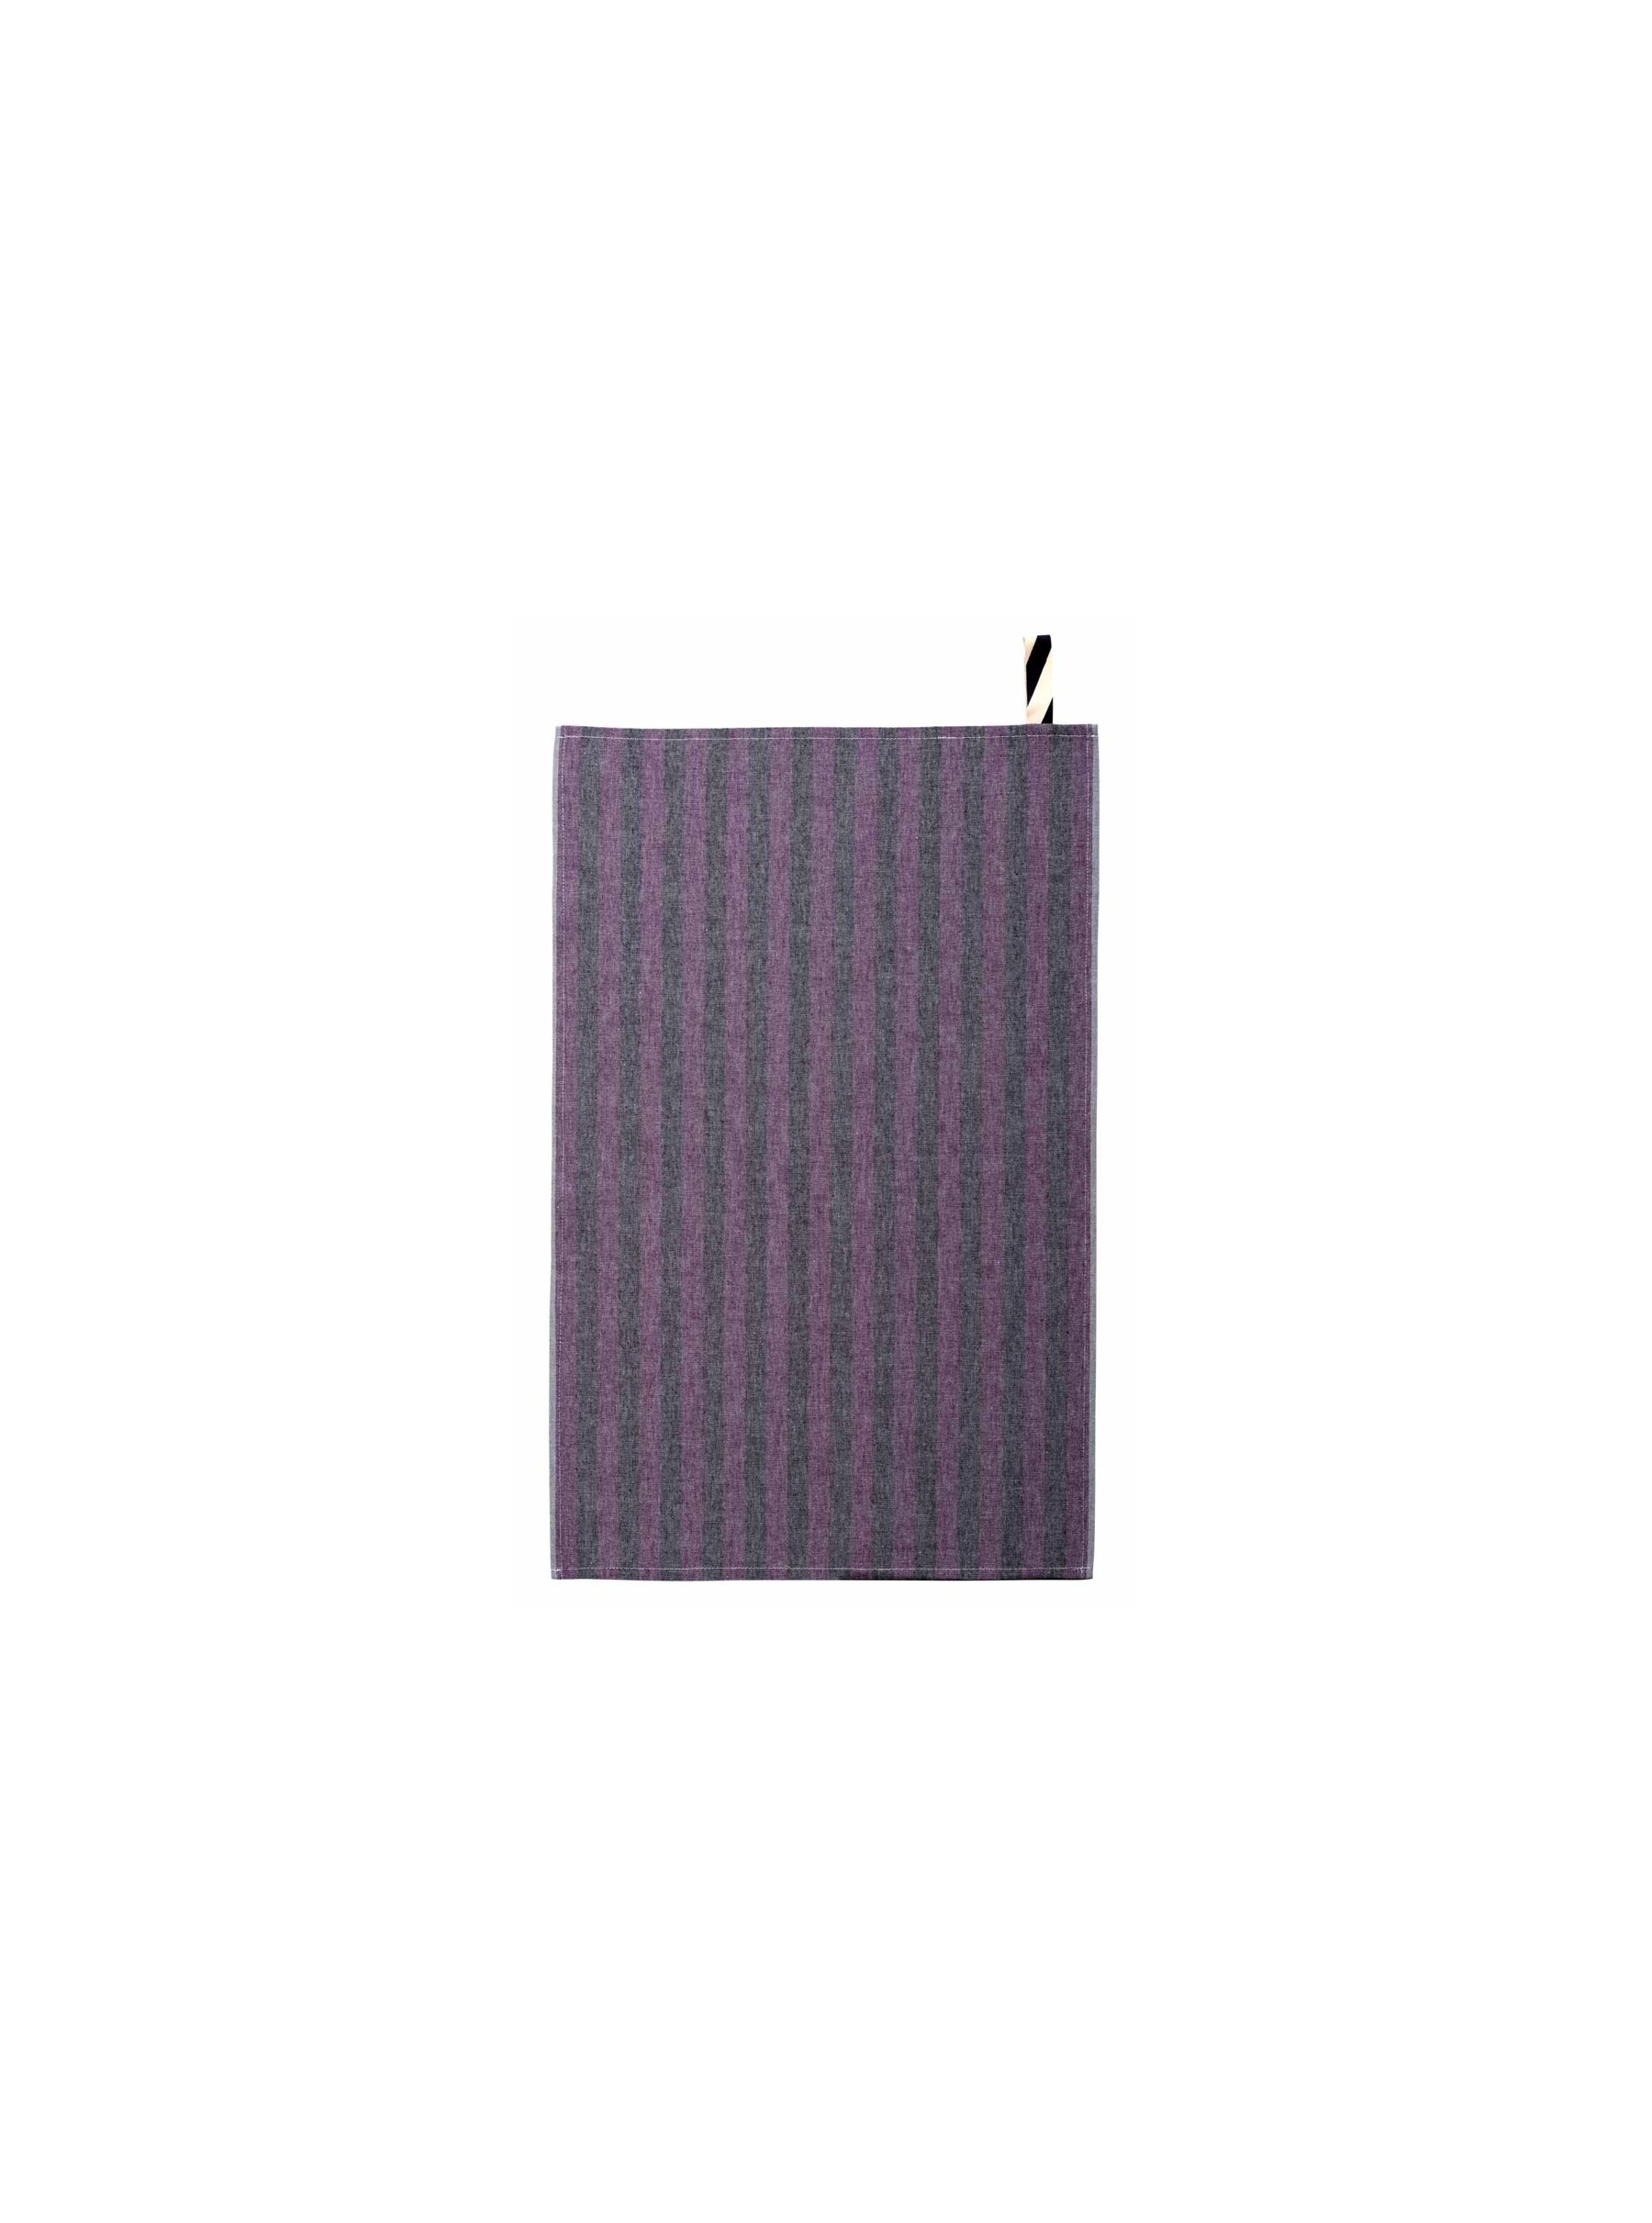 Torchon coton violet a rayures